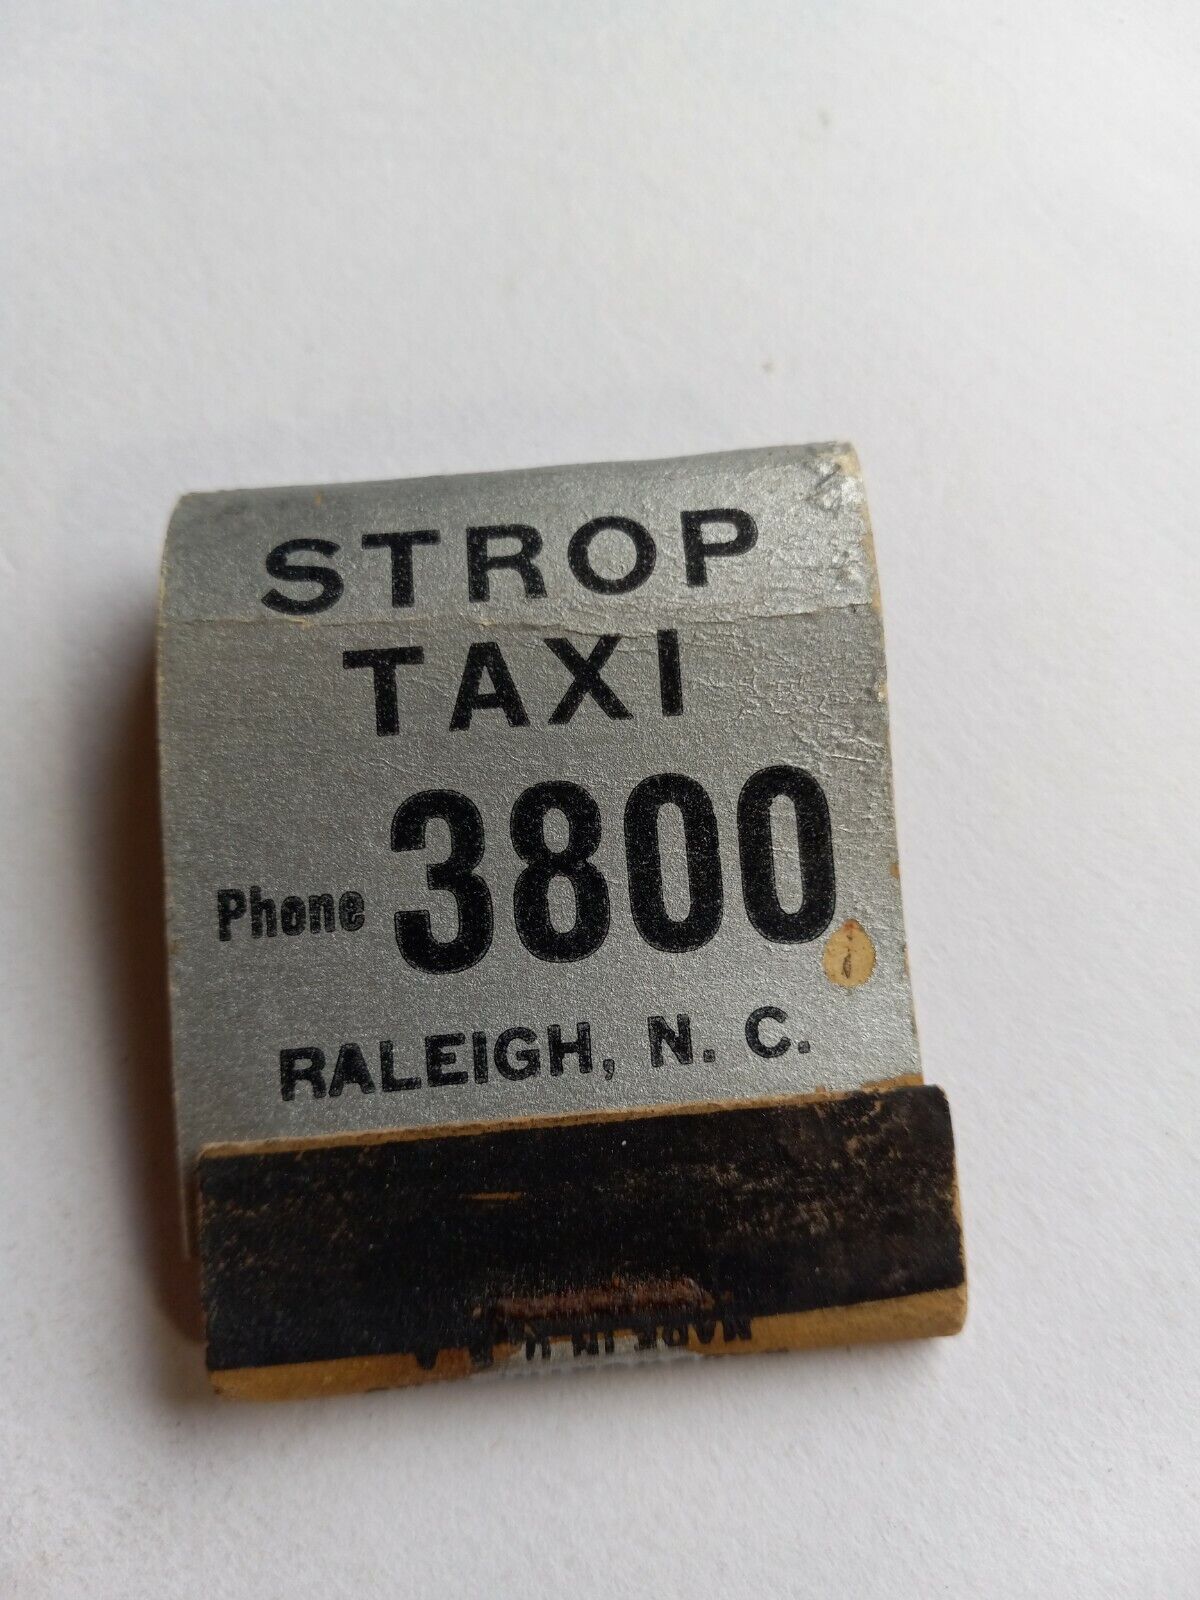 Raleigh North Carolina Strop Taxi Phone 3800 24 Hour Service Matchbook